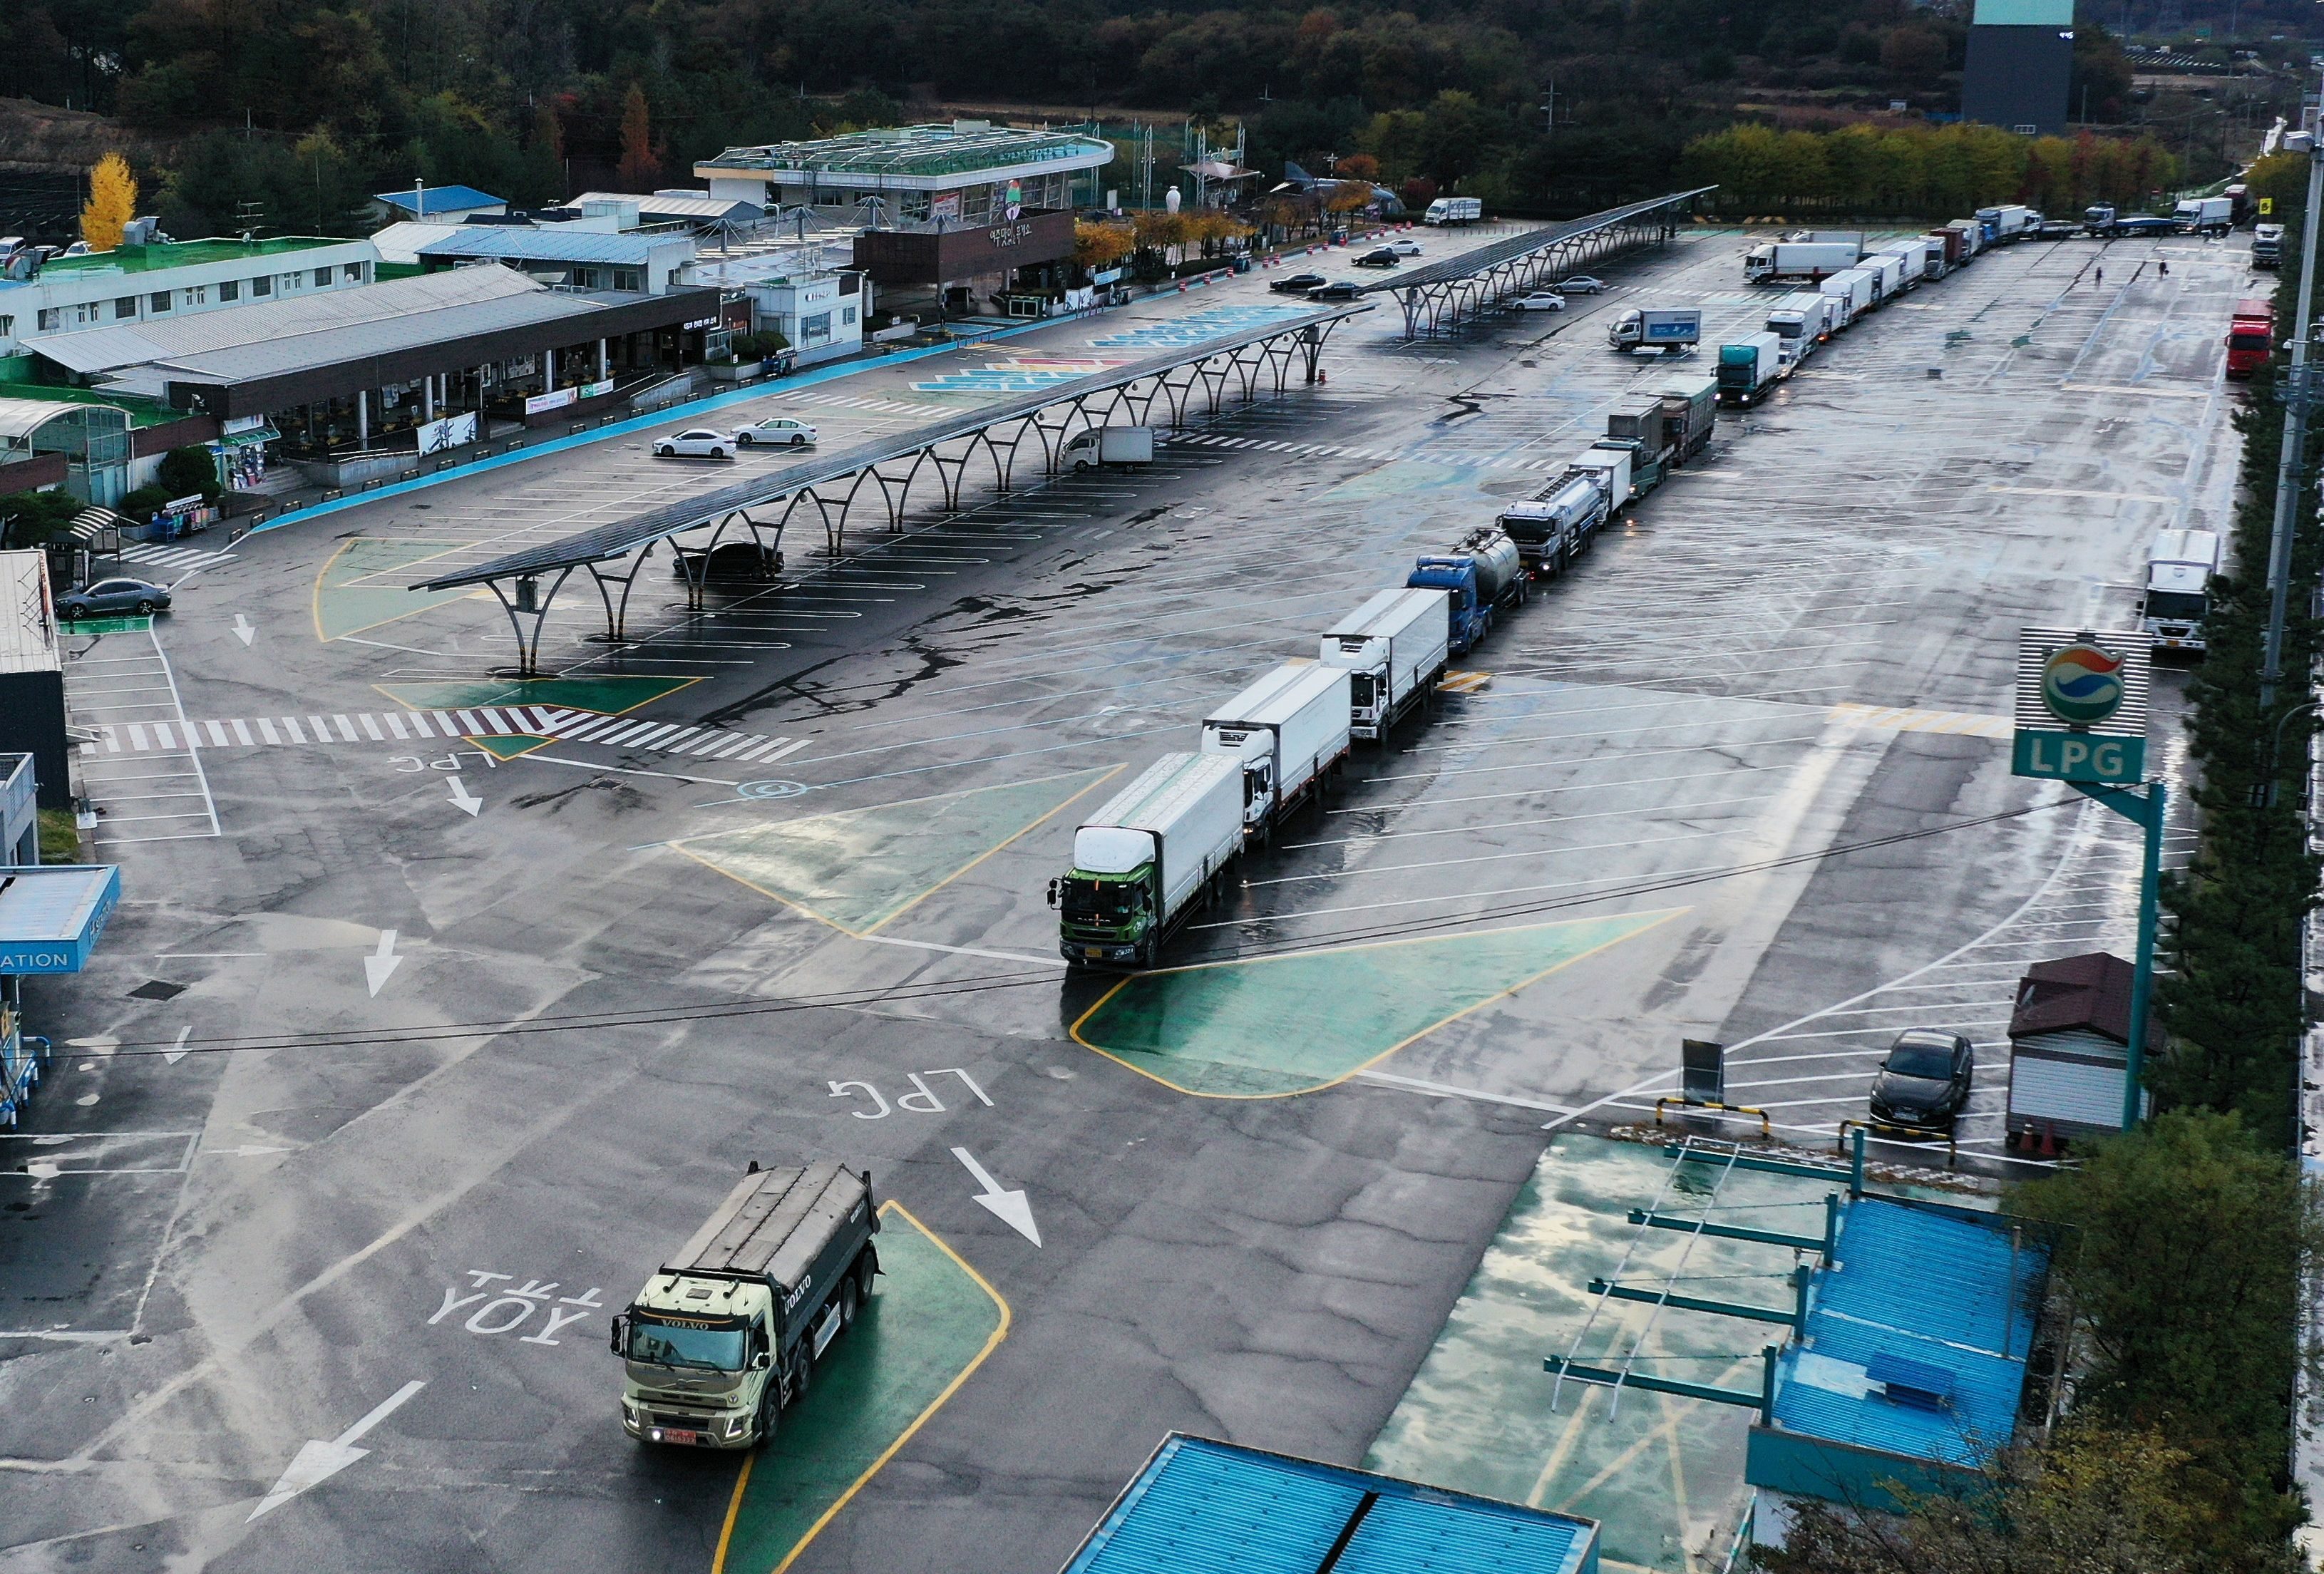 South Korea rations urea amid shortage, drivers panic buy